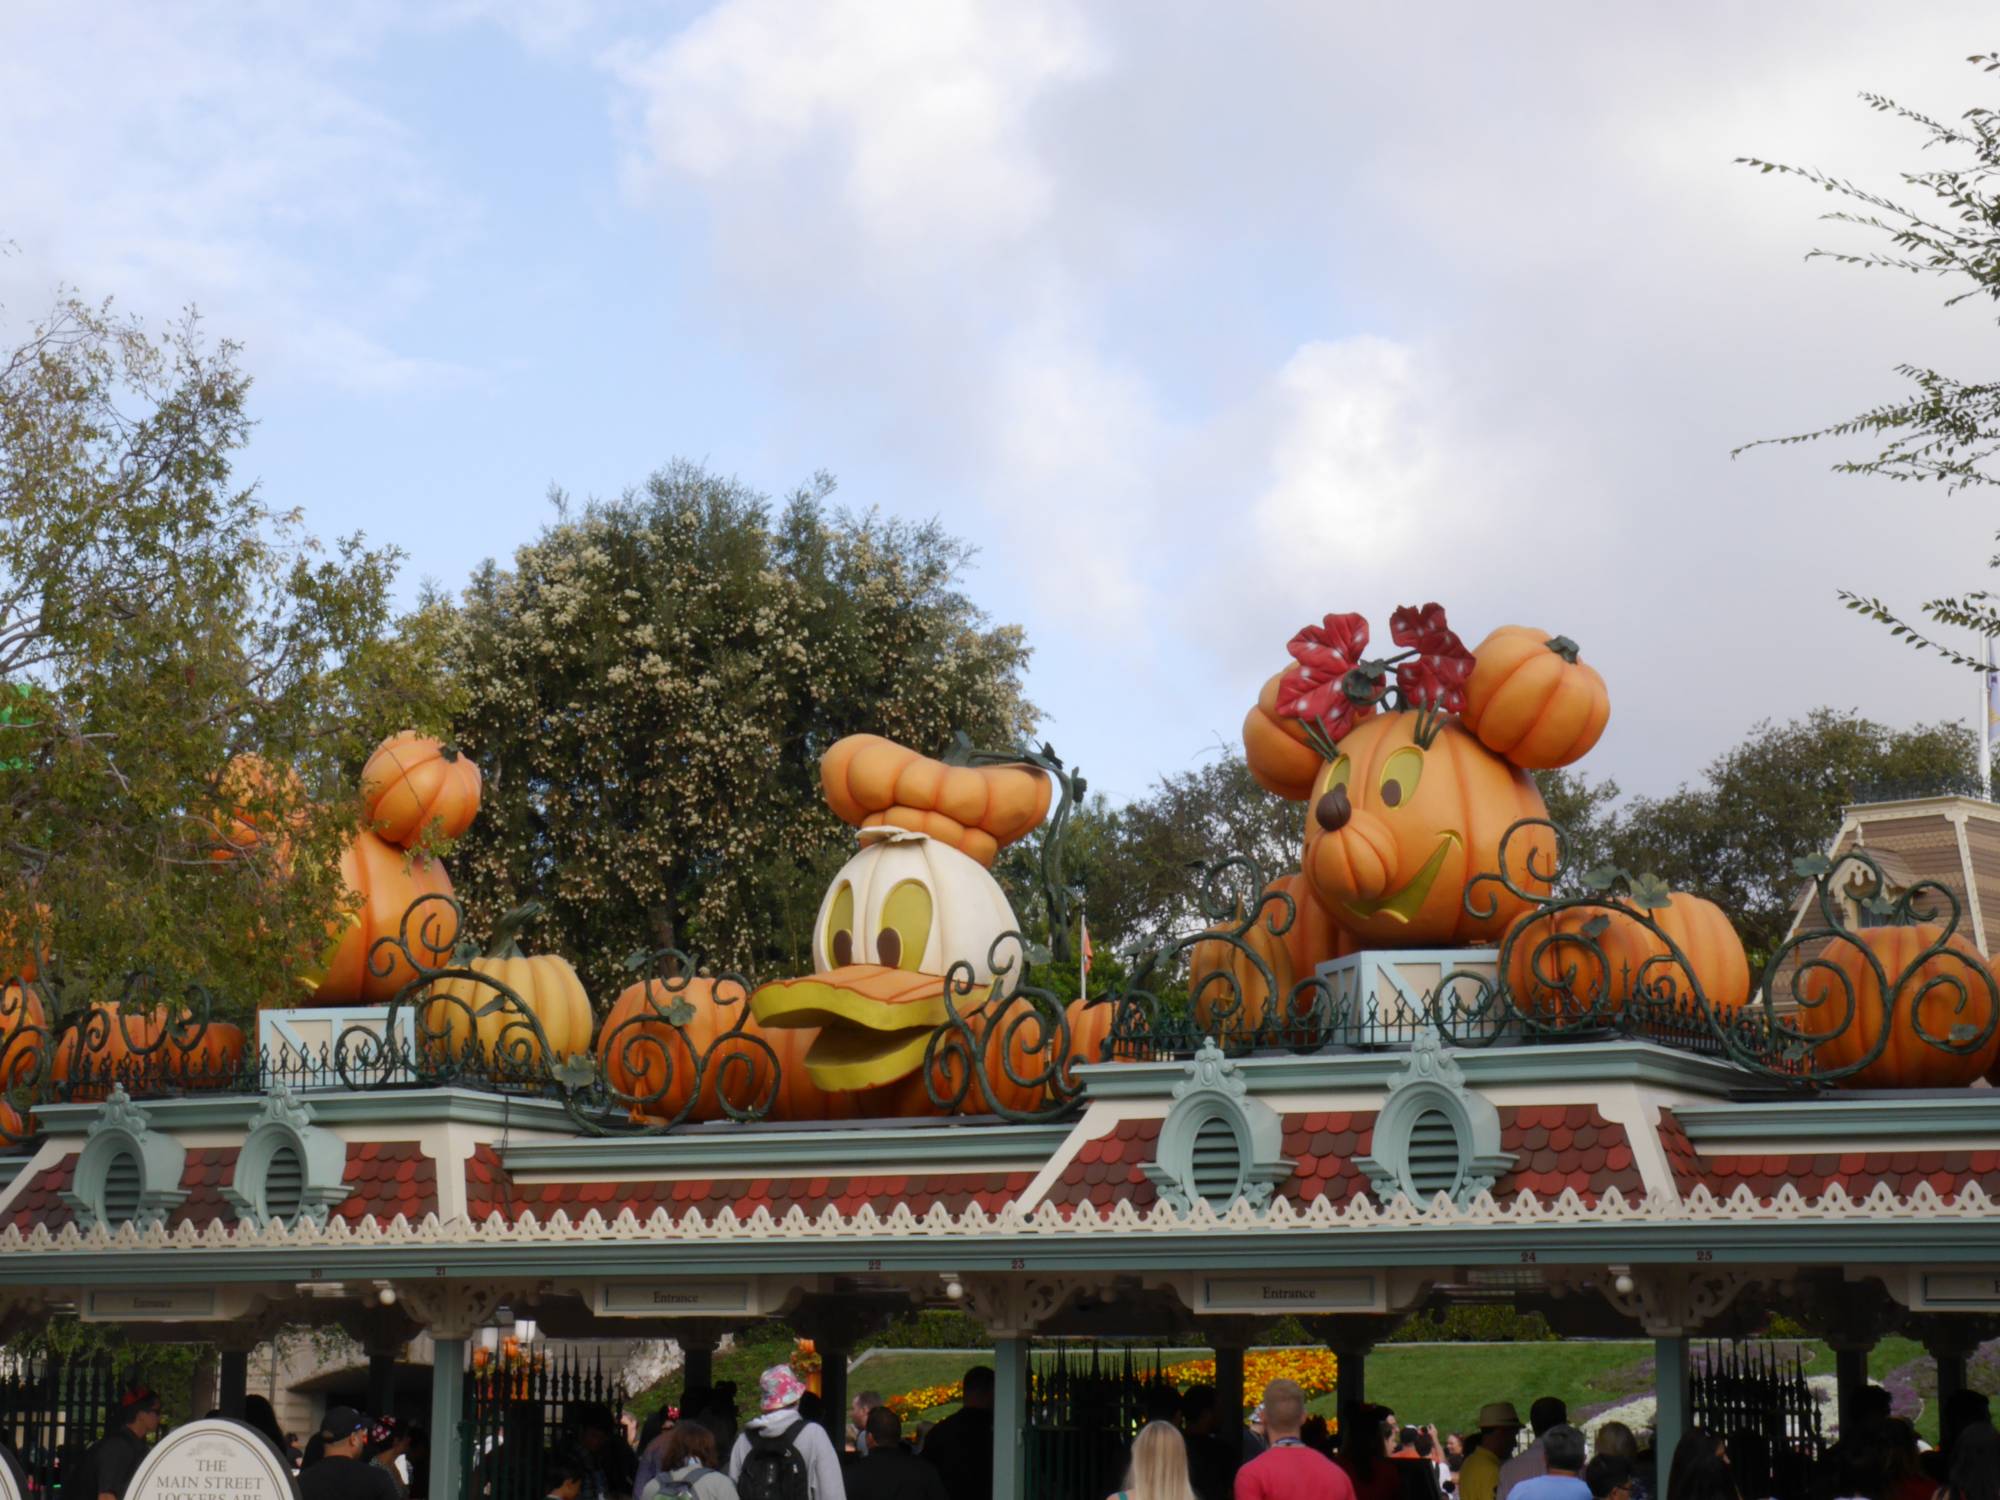 Enjoy Mickey's Halloween Party at Disneyland |PassPorter.com